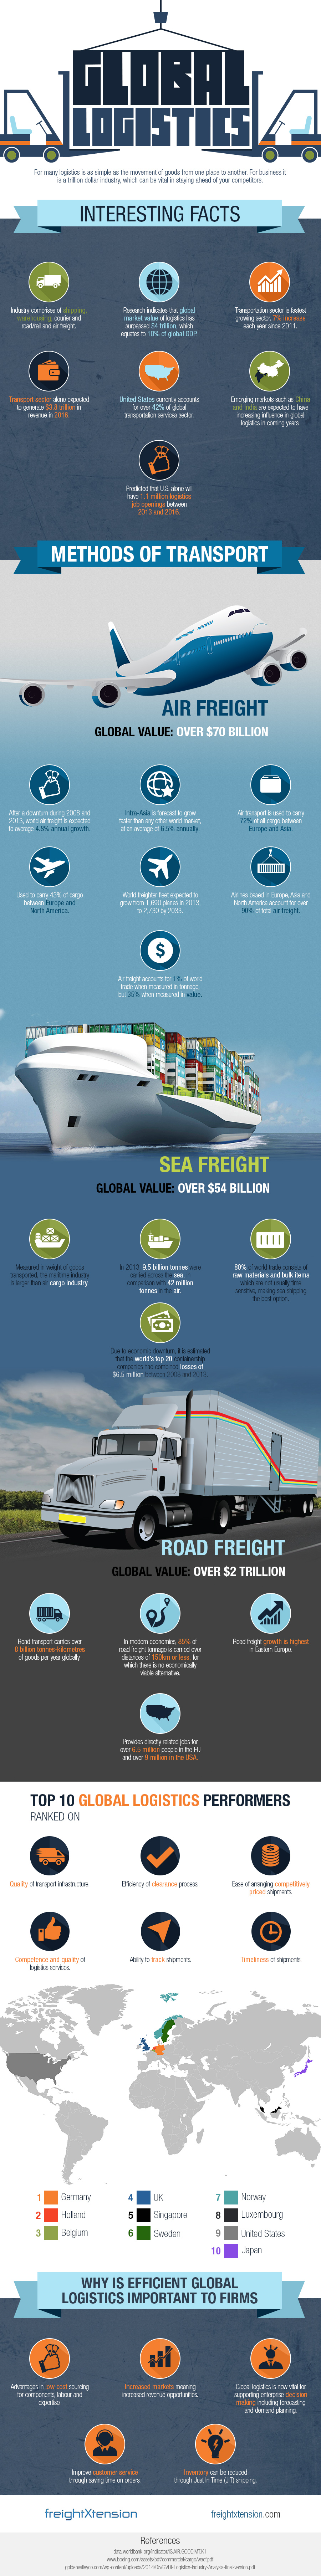 global-logistics-market-infographic.jpg